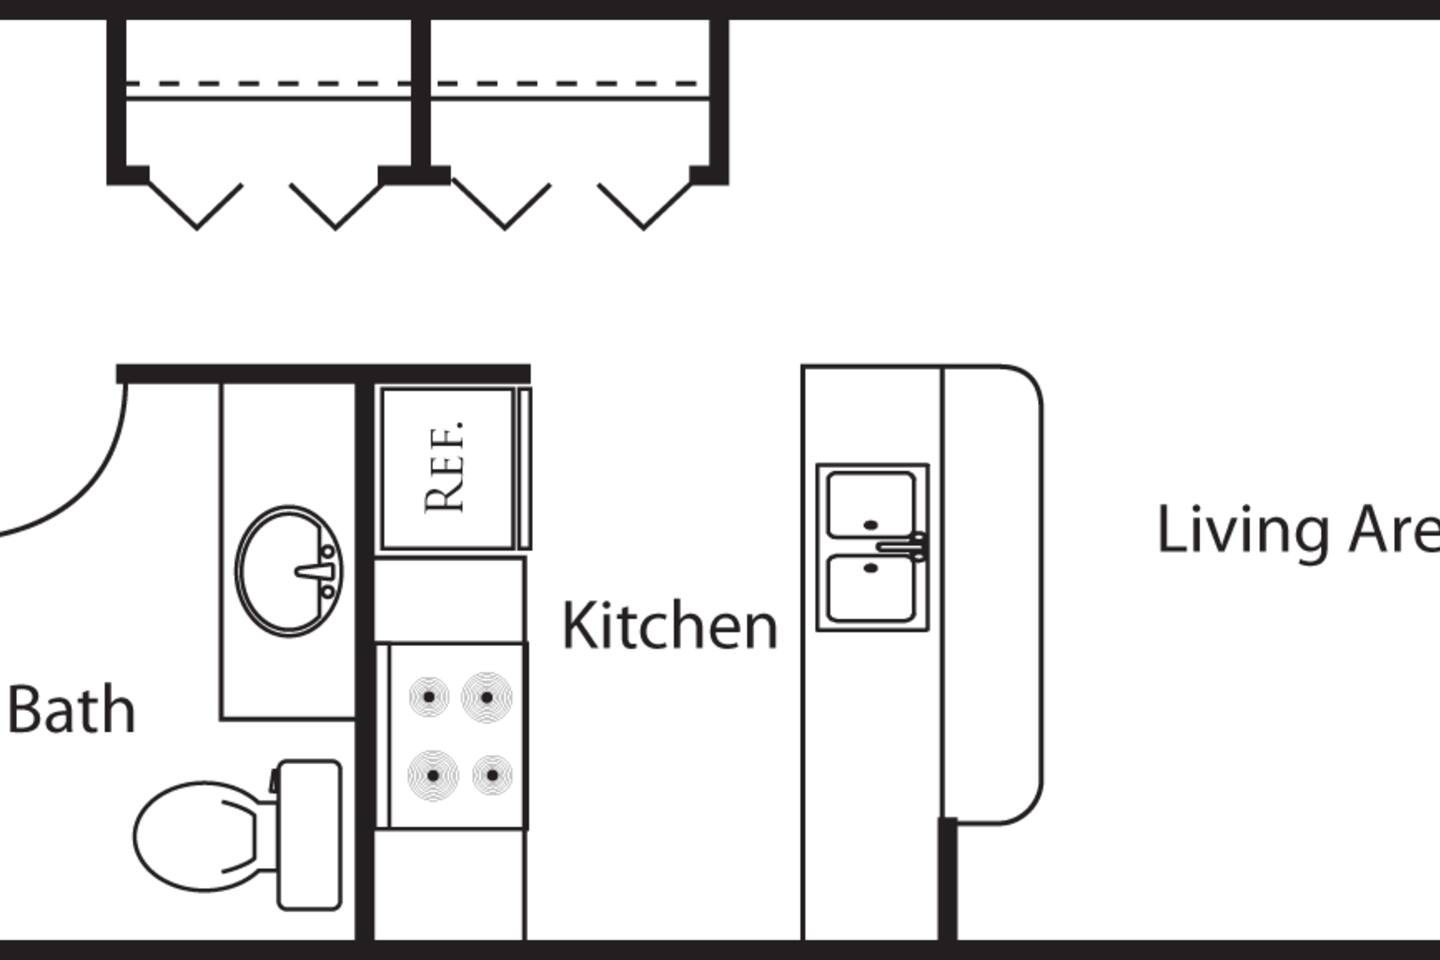 Floorplan diagram for Studio A5, showing Studio